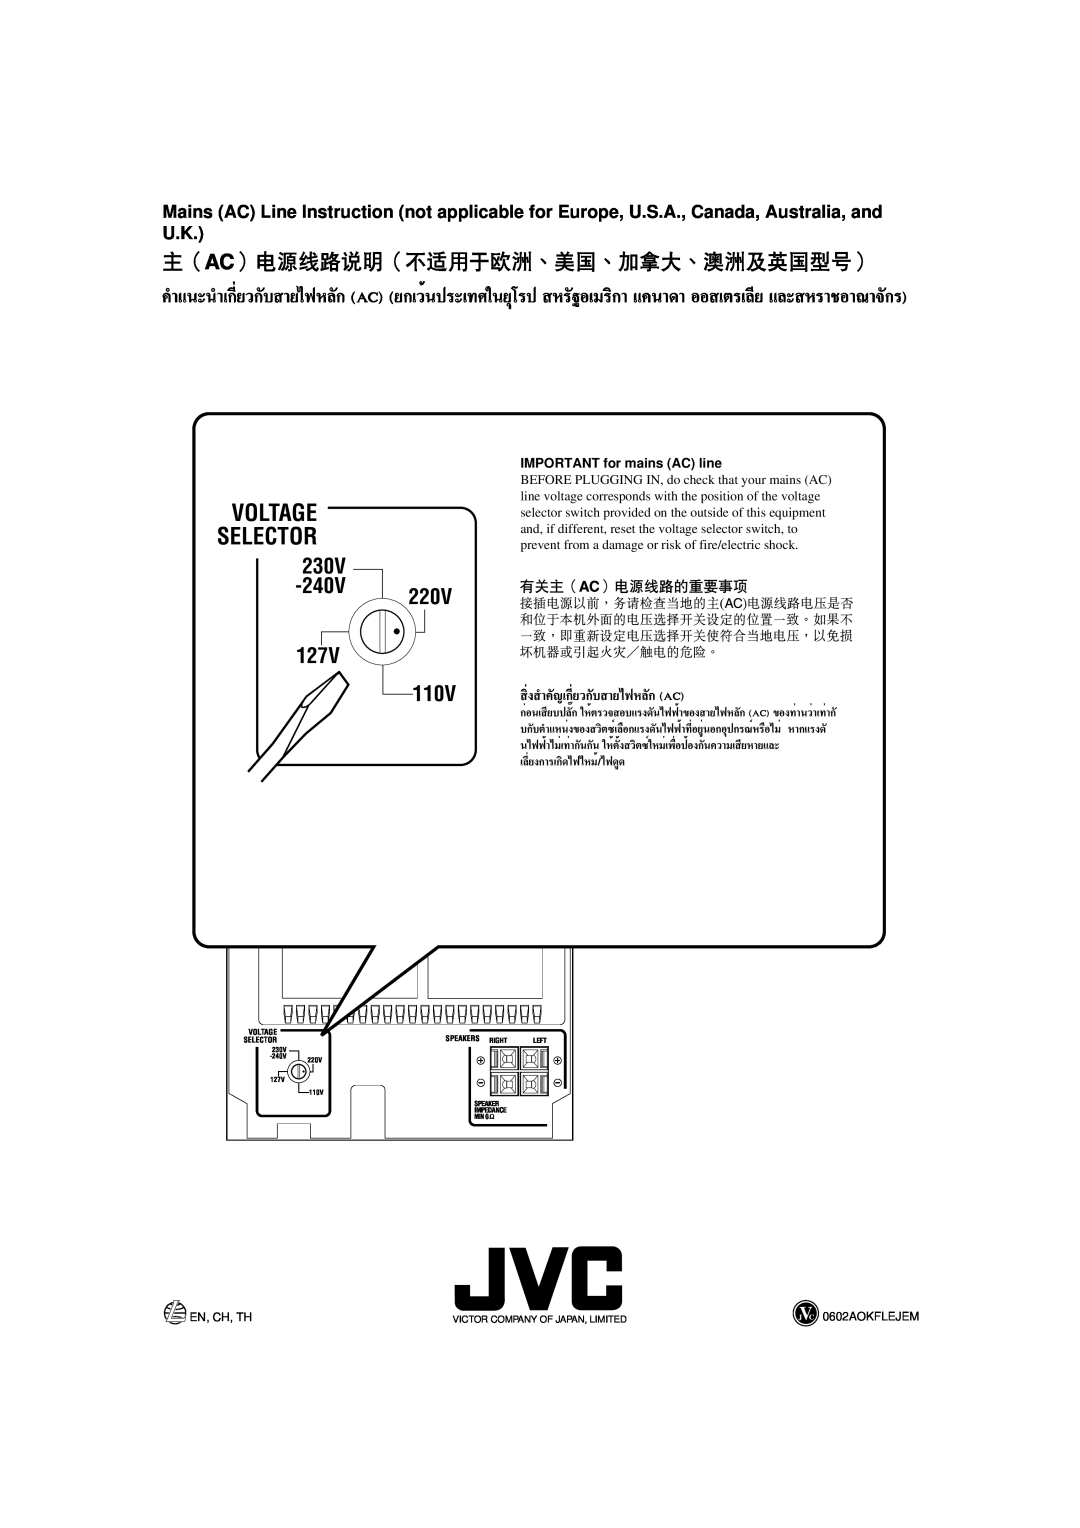 JVC CA-UXL36V 230V, 220V, 110V, Voltage Selector, 240V, 127V, IMPORTANT for mains AC line, ËÕπ‡’¬ ª≈-Í„ÀÈ, En, Ch, Th 